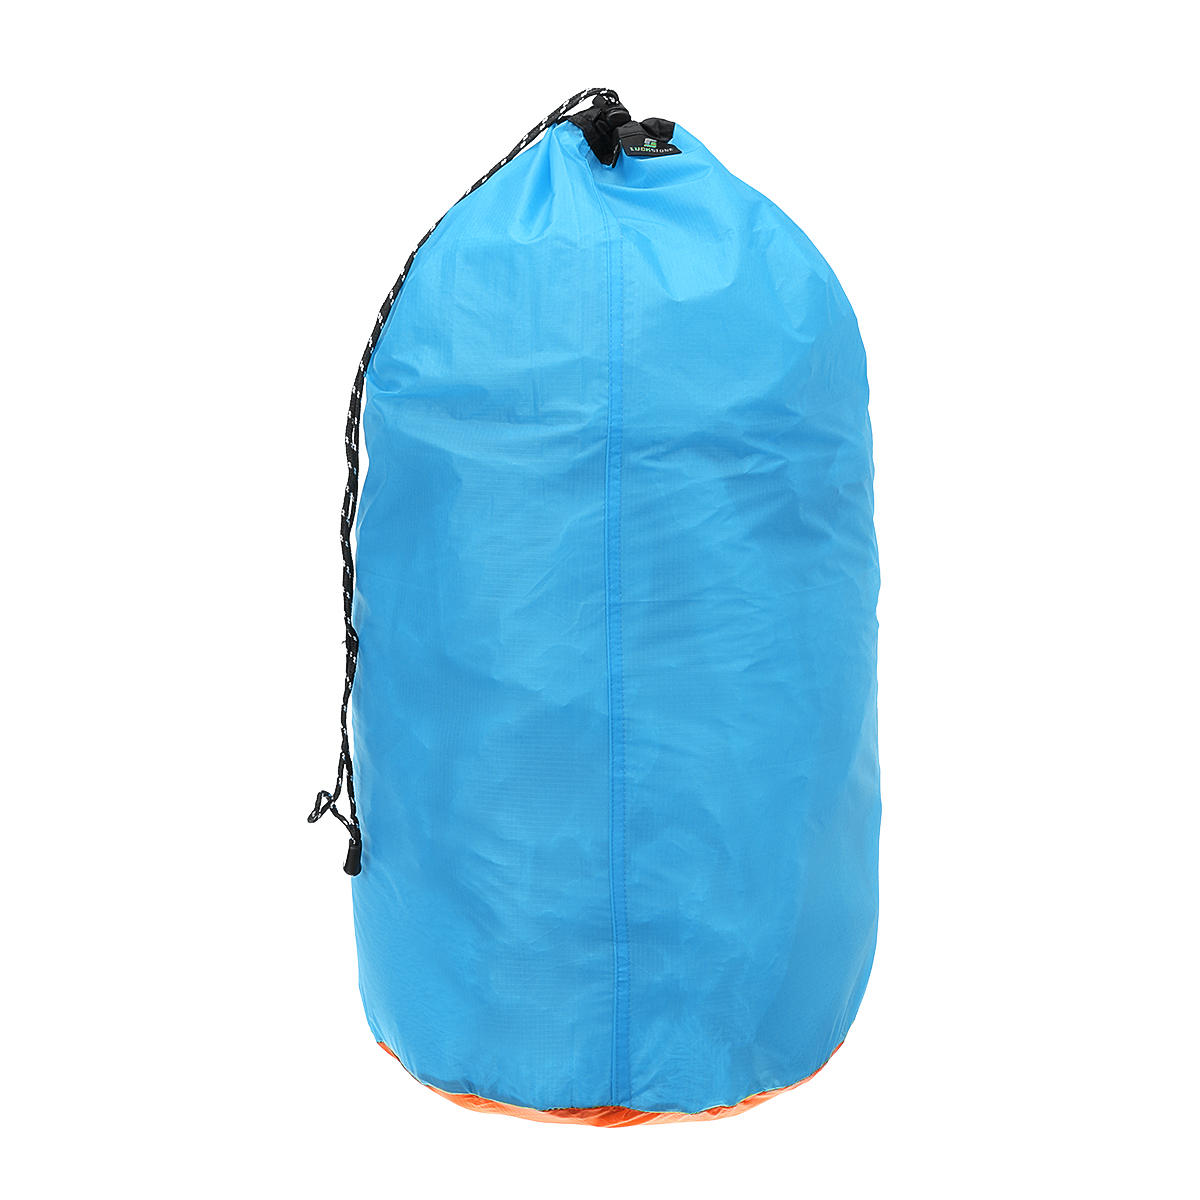 Waterproof Laundry Shoes Storage Bag Outdoot Camping Traveling Drawstring Bag-S/M/L/XL/2XL 